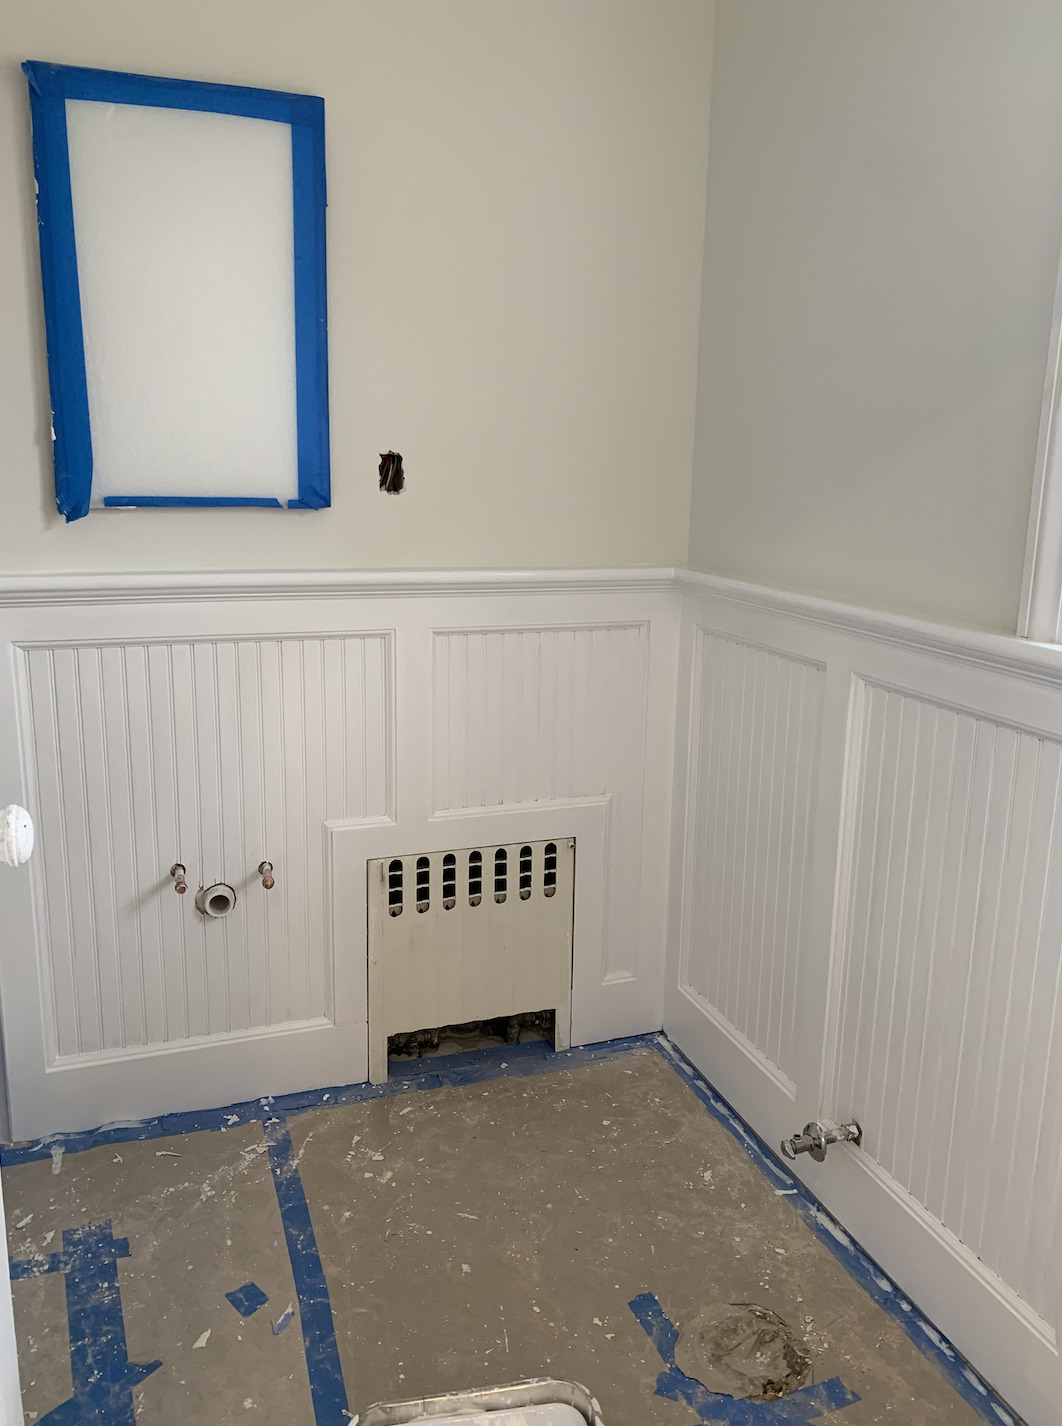 Simply by Simone - Simone Piliero - My Black and White Bathroom Renovation - Wainscoating Installation Complete #bathroom #home #renovation #bathroomrenovation #diyhome #bathroomtiles #bathroomdecor #bathroomideas #bathroomrenovationideas